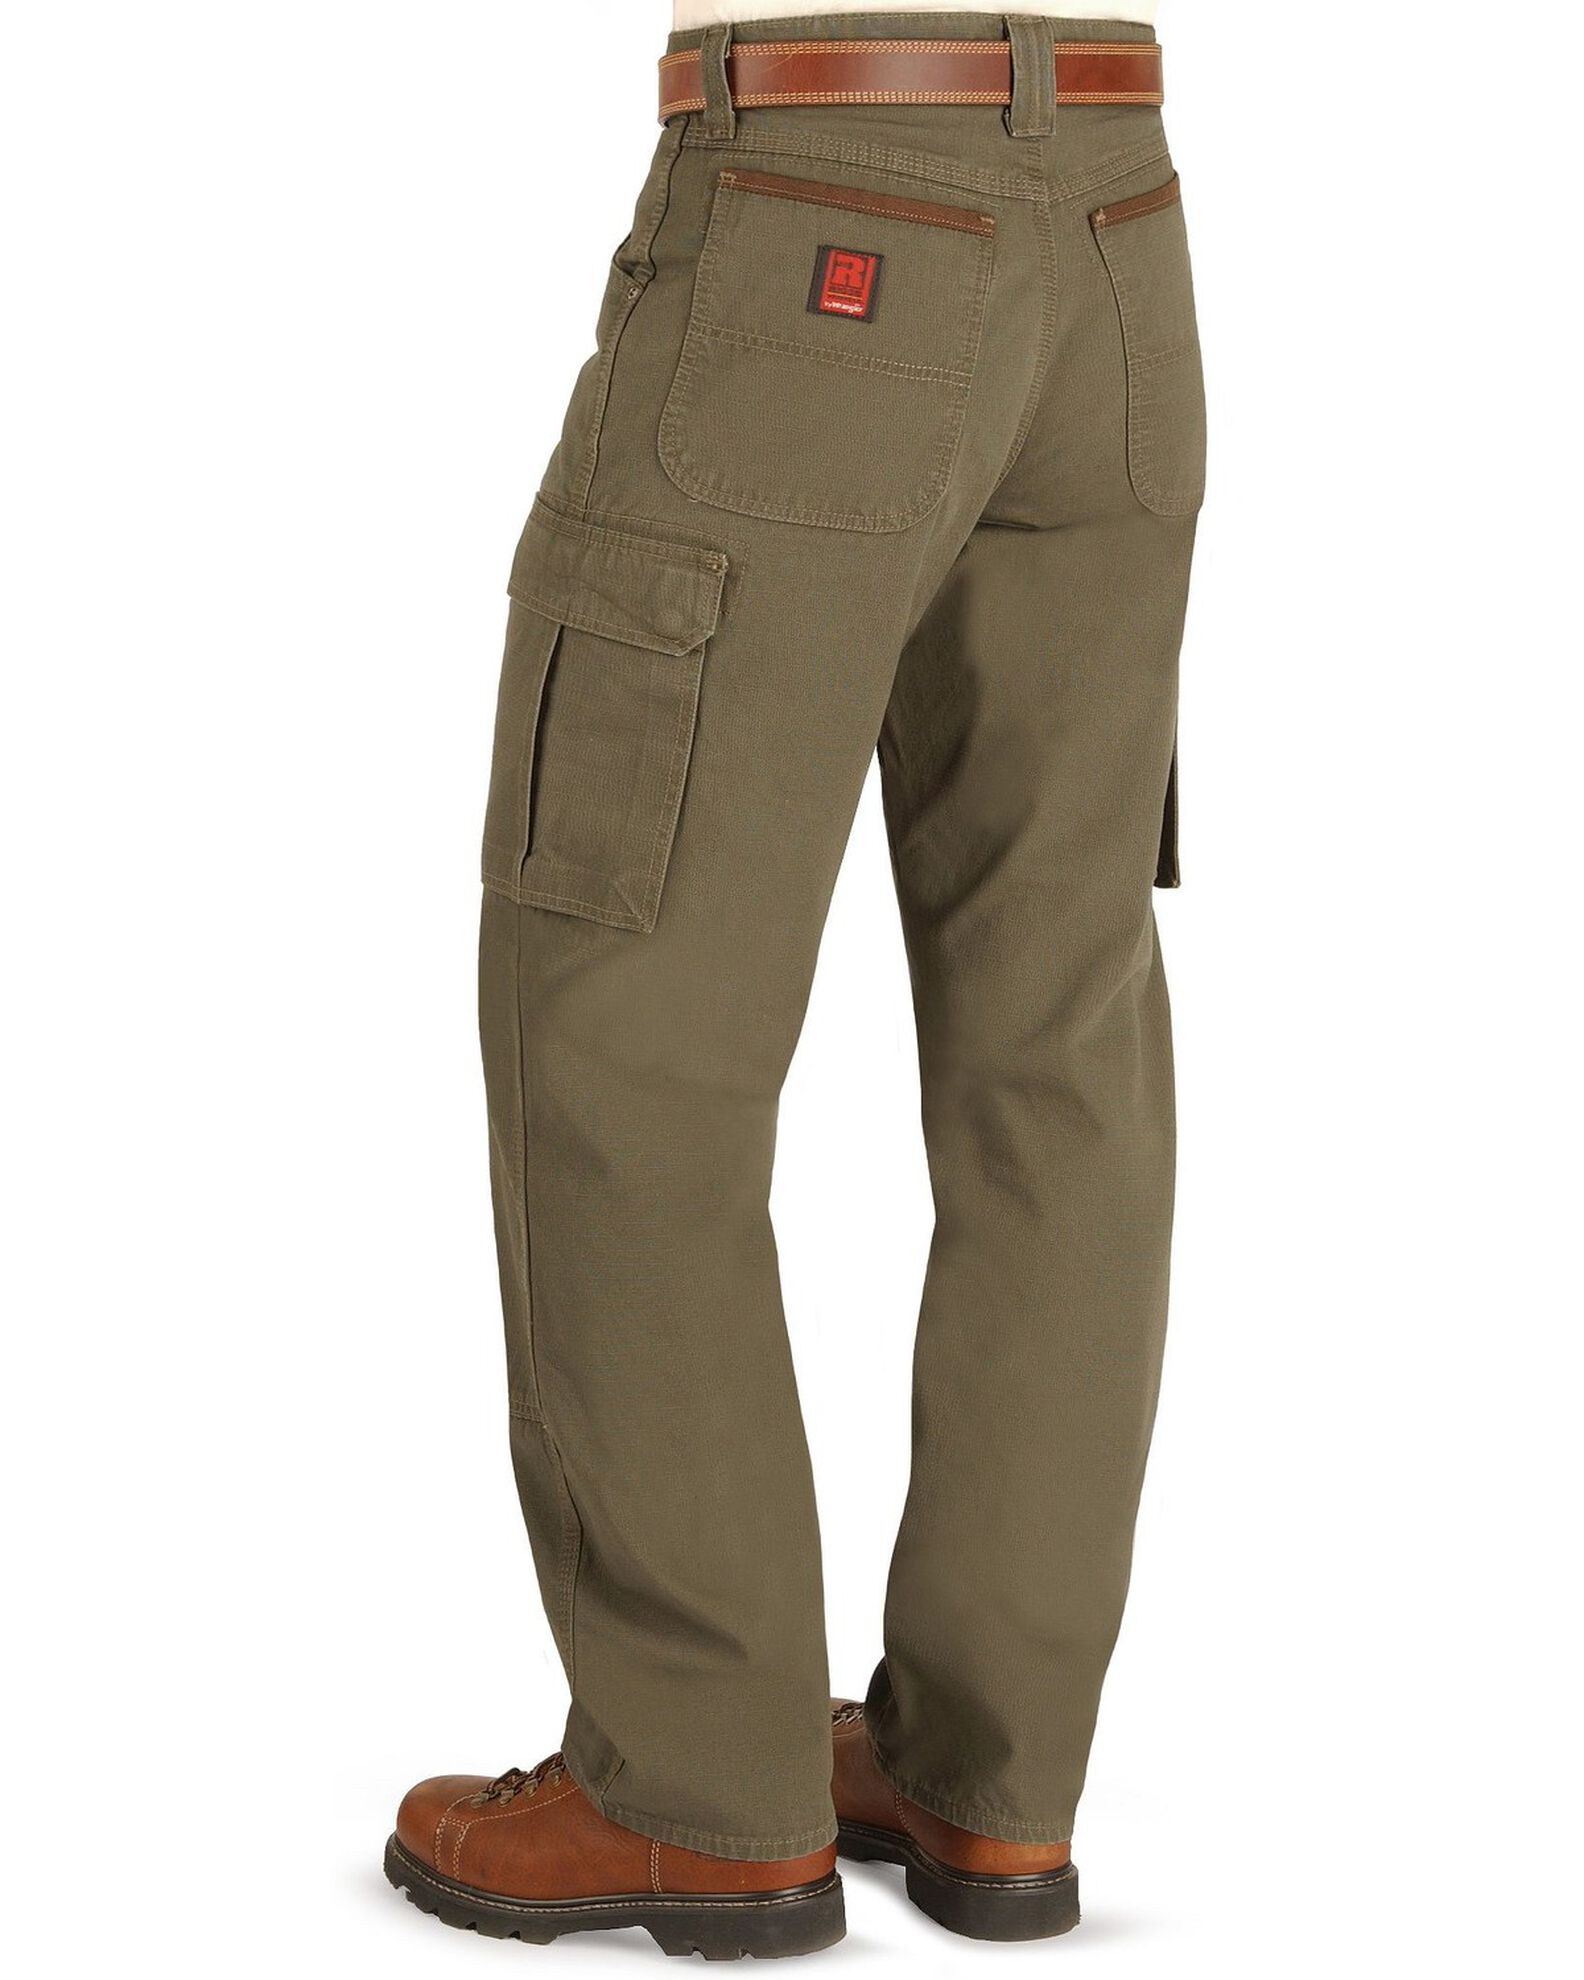 Wrangler Riggs Workwear Ranger Pants | Boot Barn